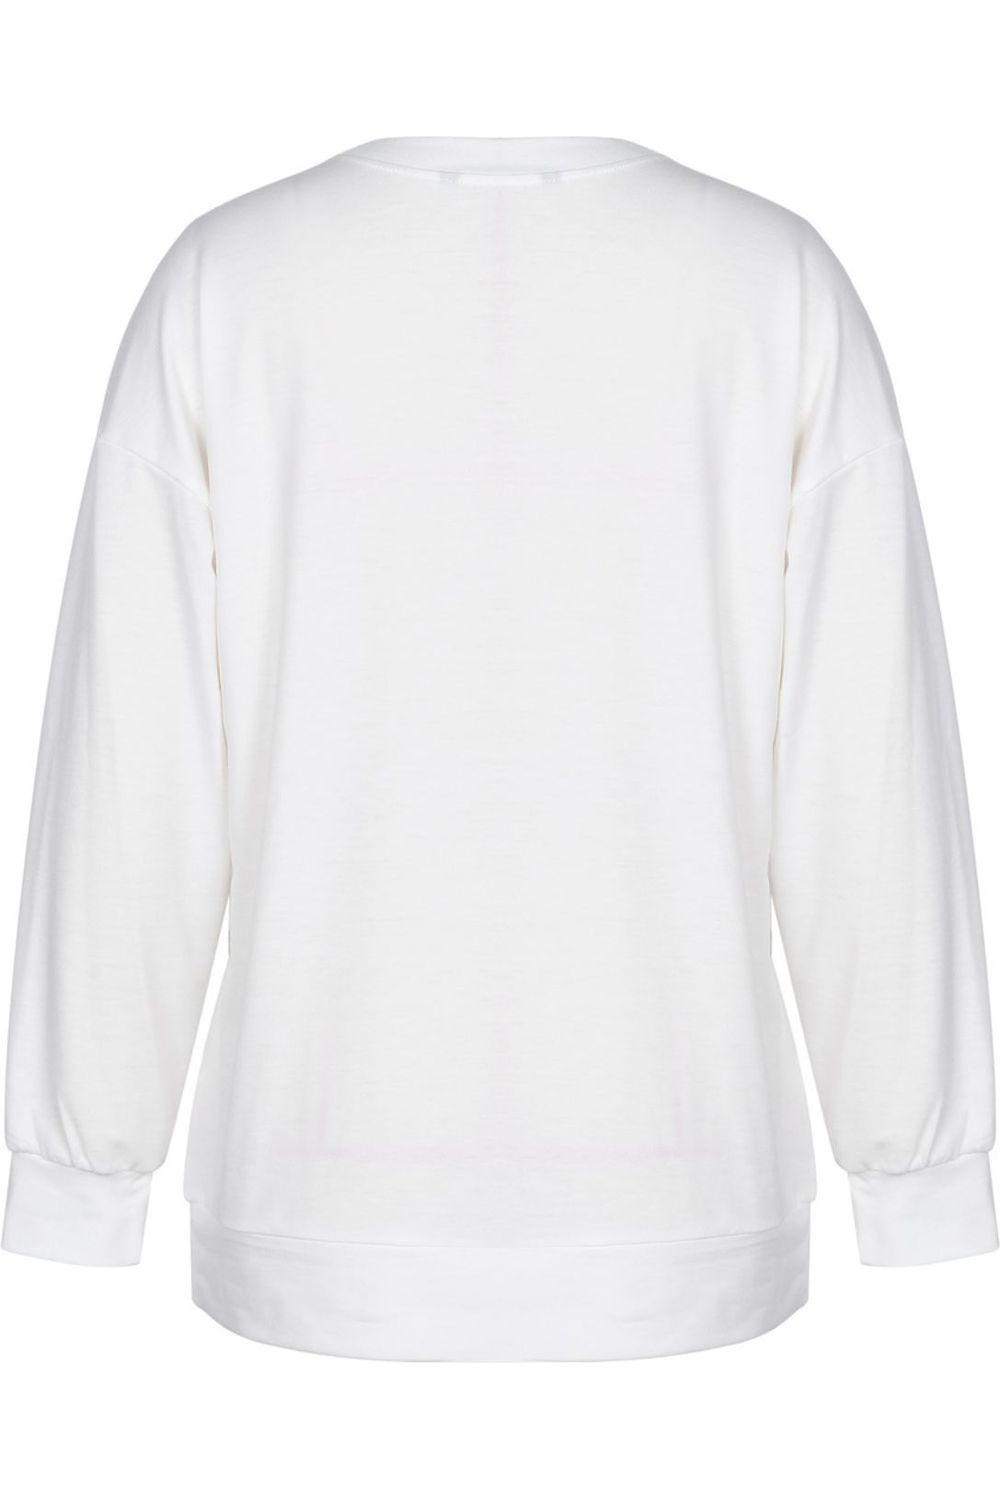 Women Graphic Dropped Shoulder Round Neck White Long Sleeve Sweatshirt